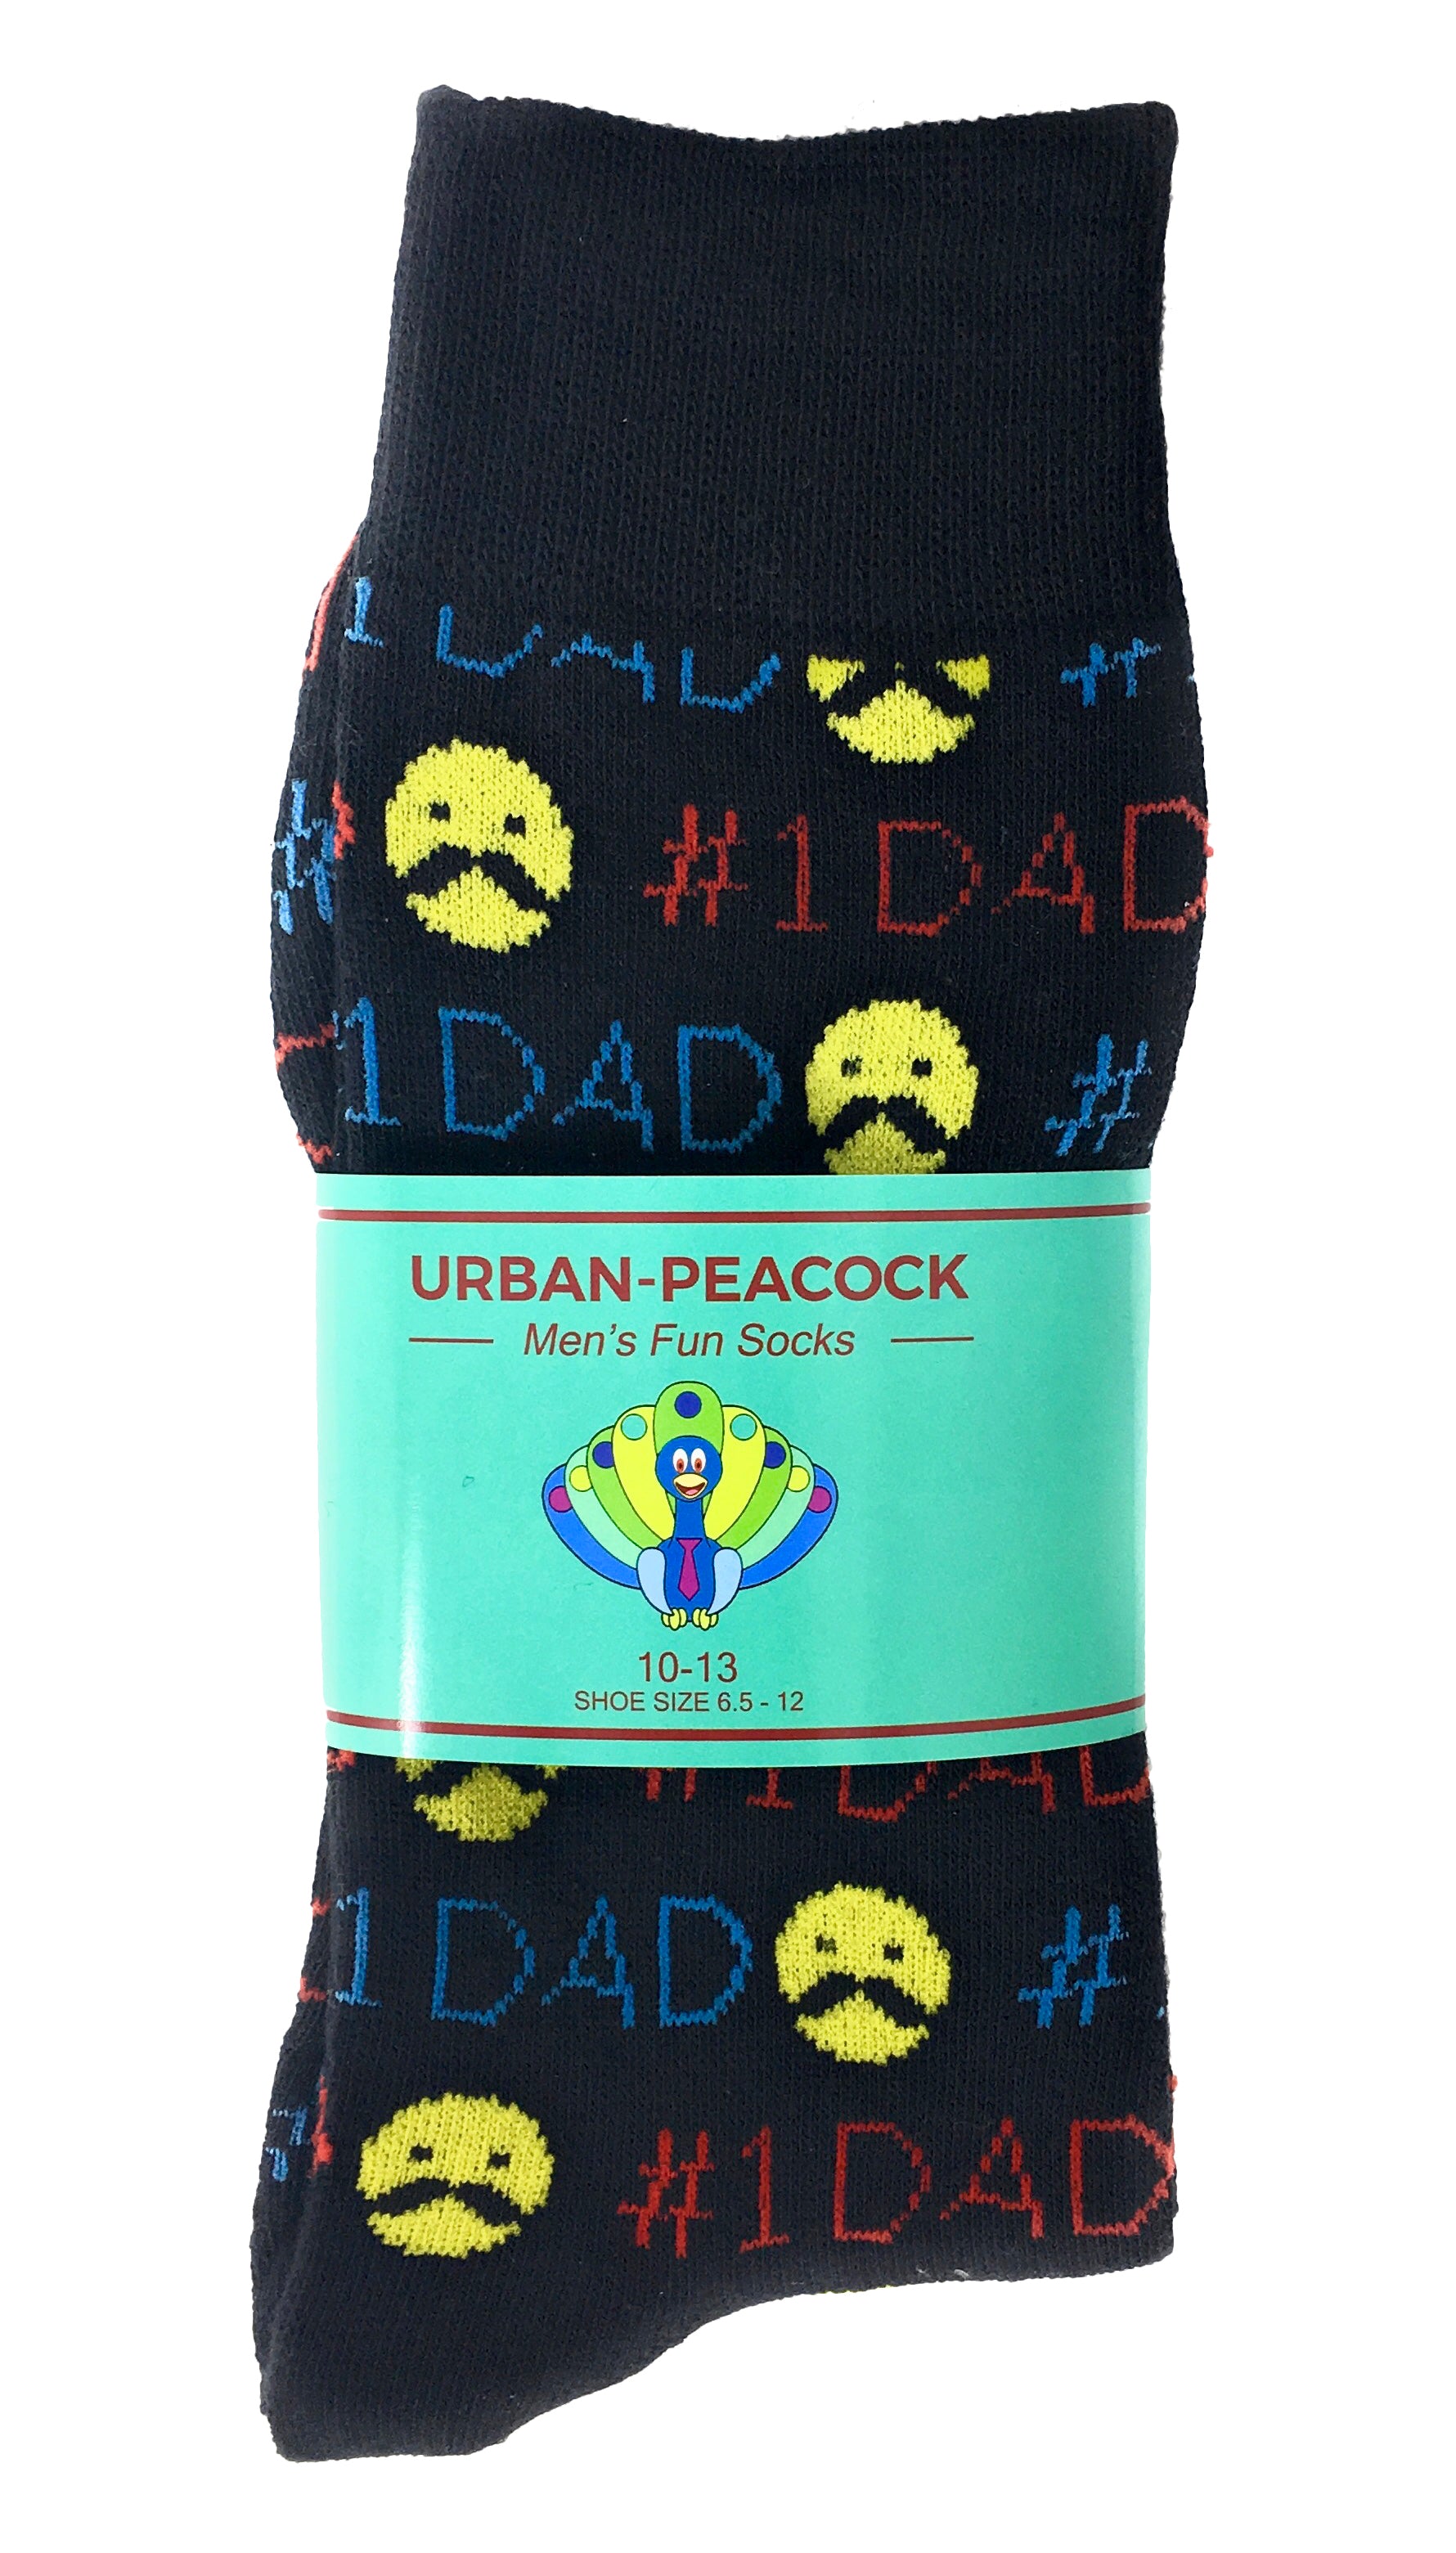 Men's Novelty Crew Socks - #1 Dad